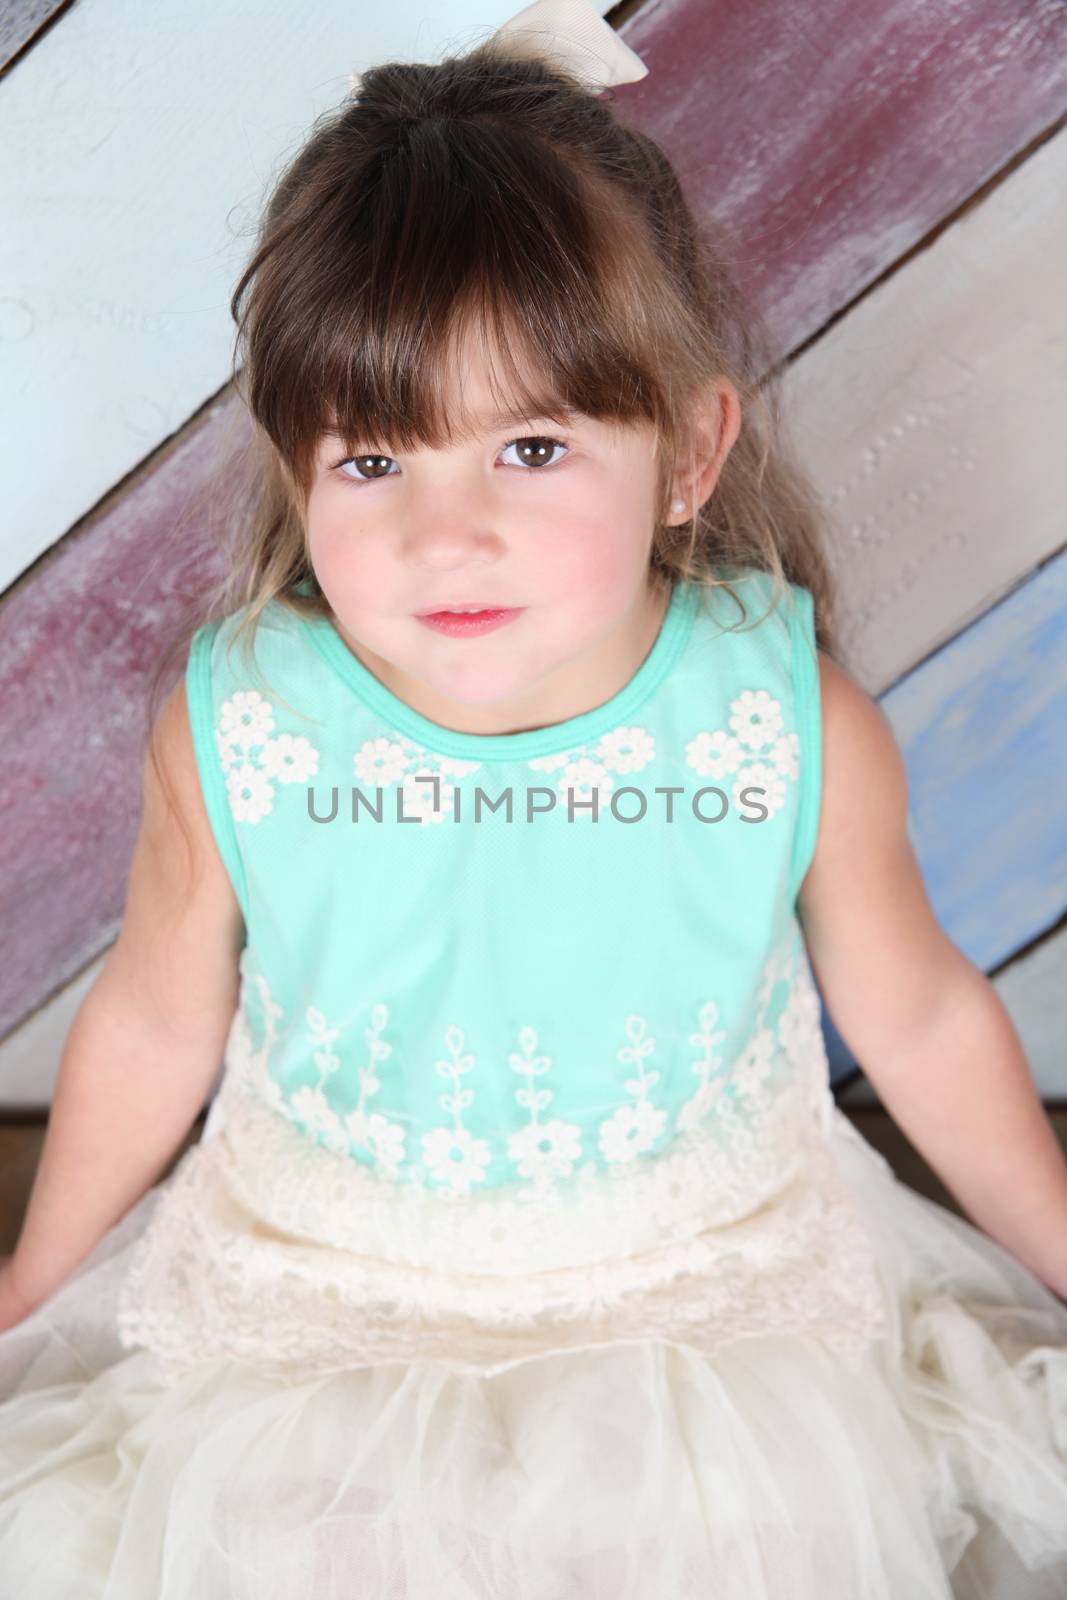 Brunette toddler girl against a colorful background